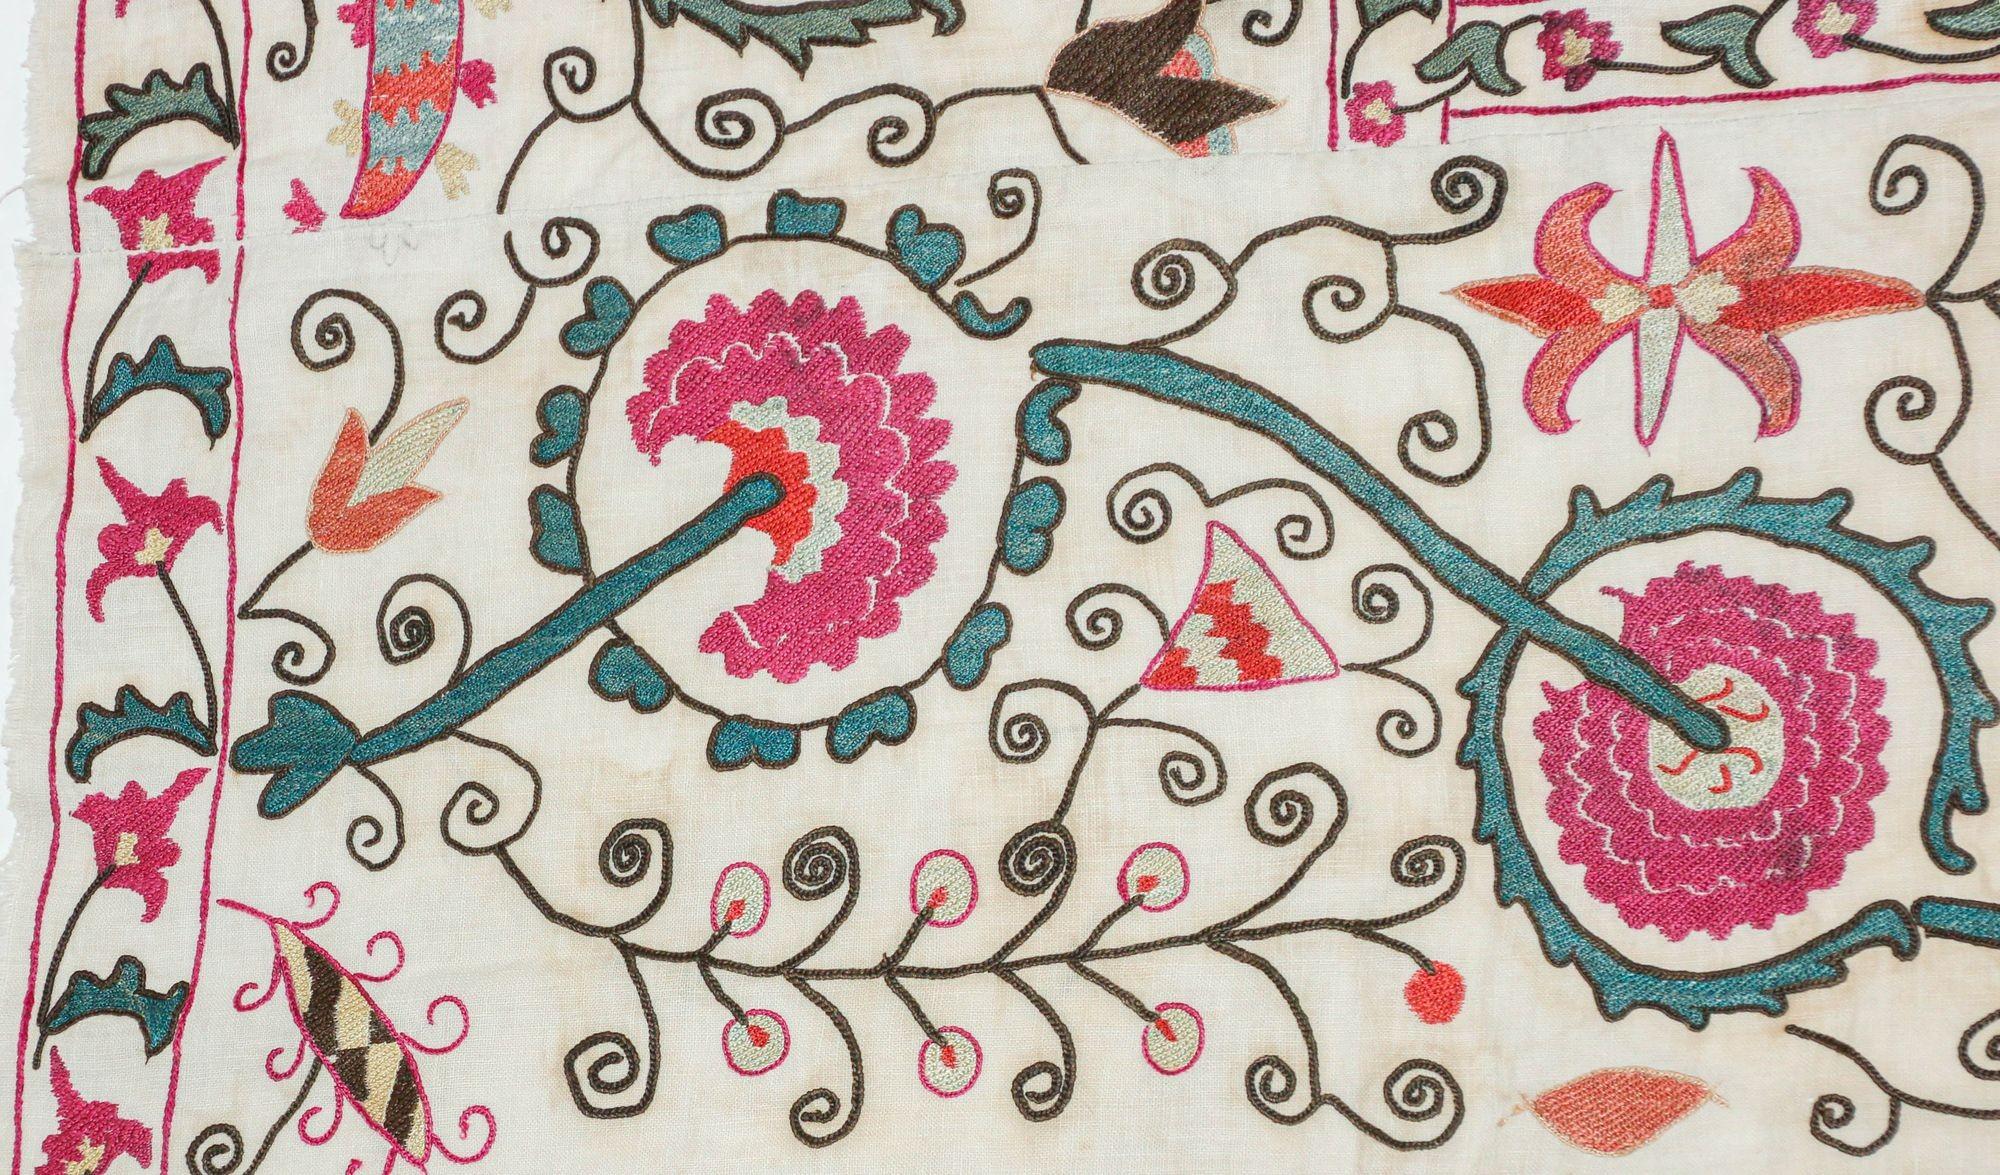 19th C. Suzani Bukhara Uzbekistan Antique Embroidered Islamic Art Textile Susani For Sale 6